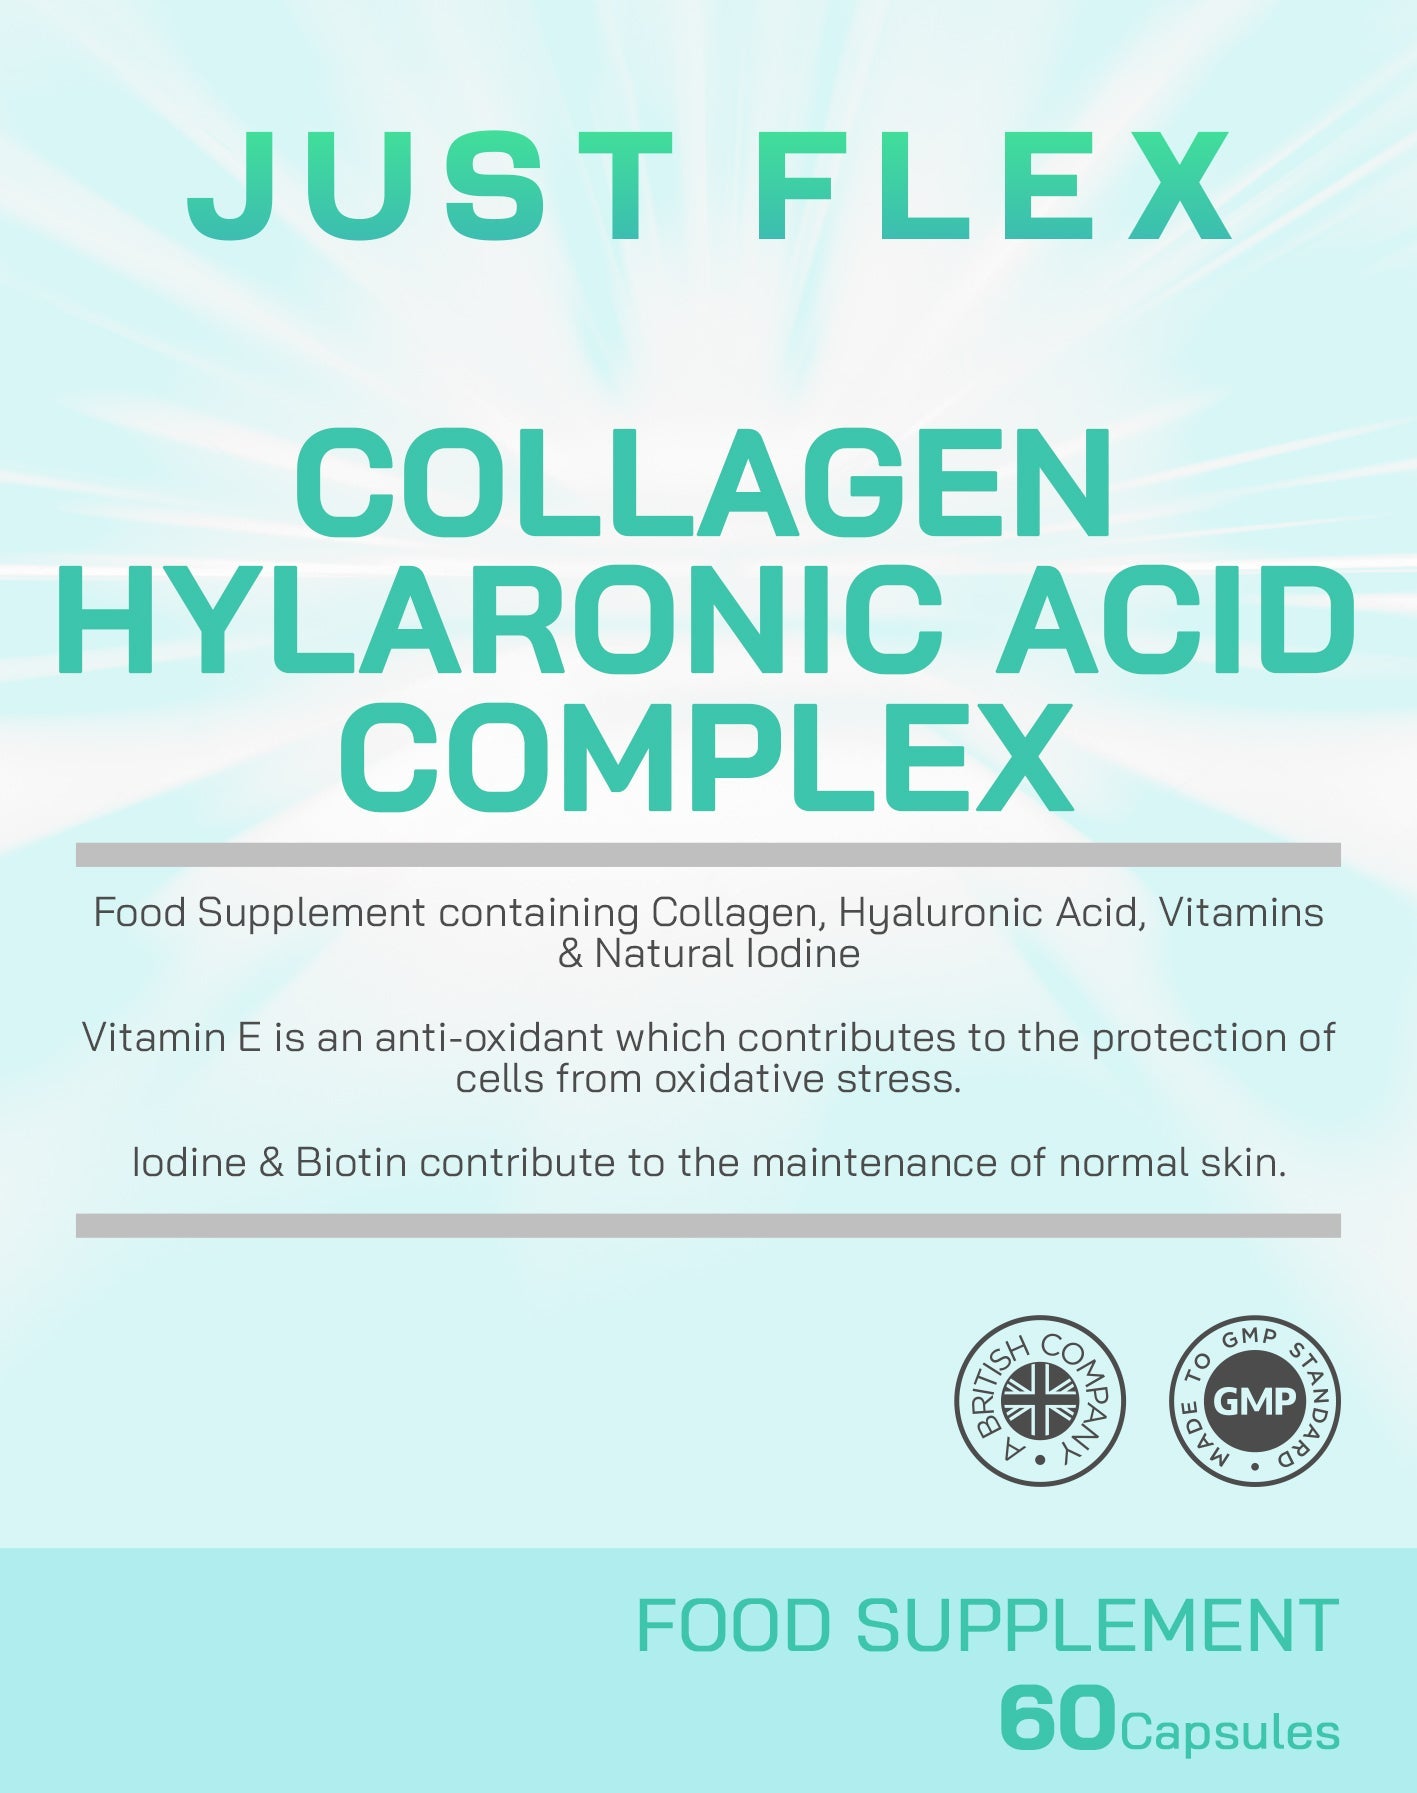 Just Flex Collagen Hyaluronic Acid Complex 60 Capsules - Just Flex